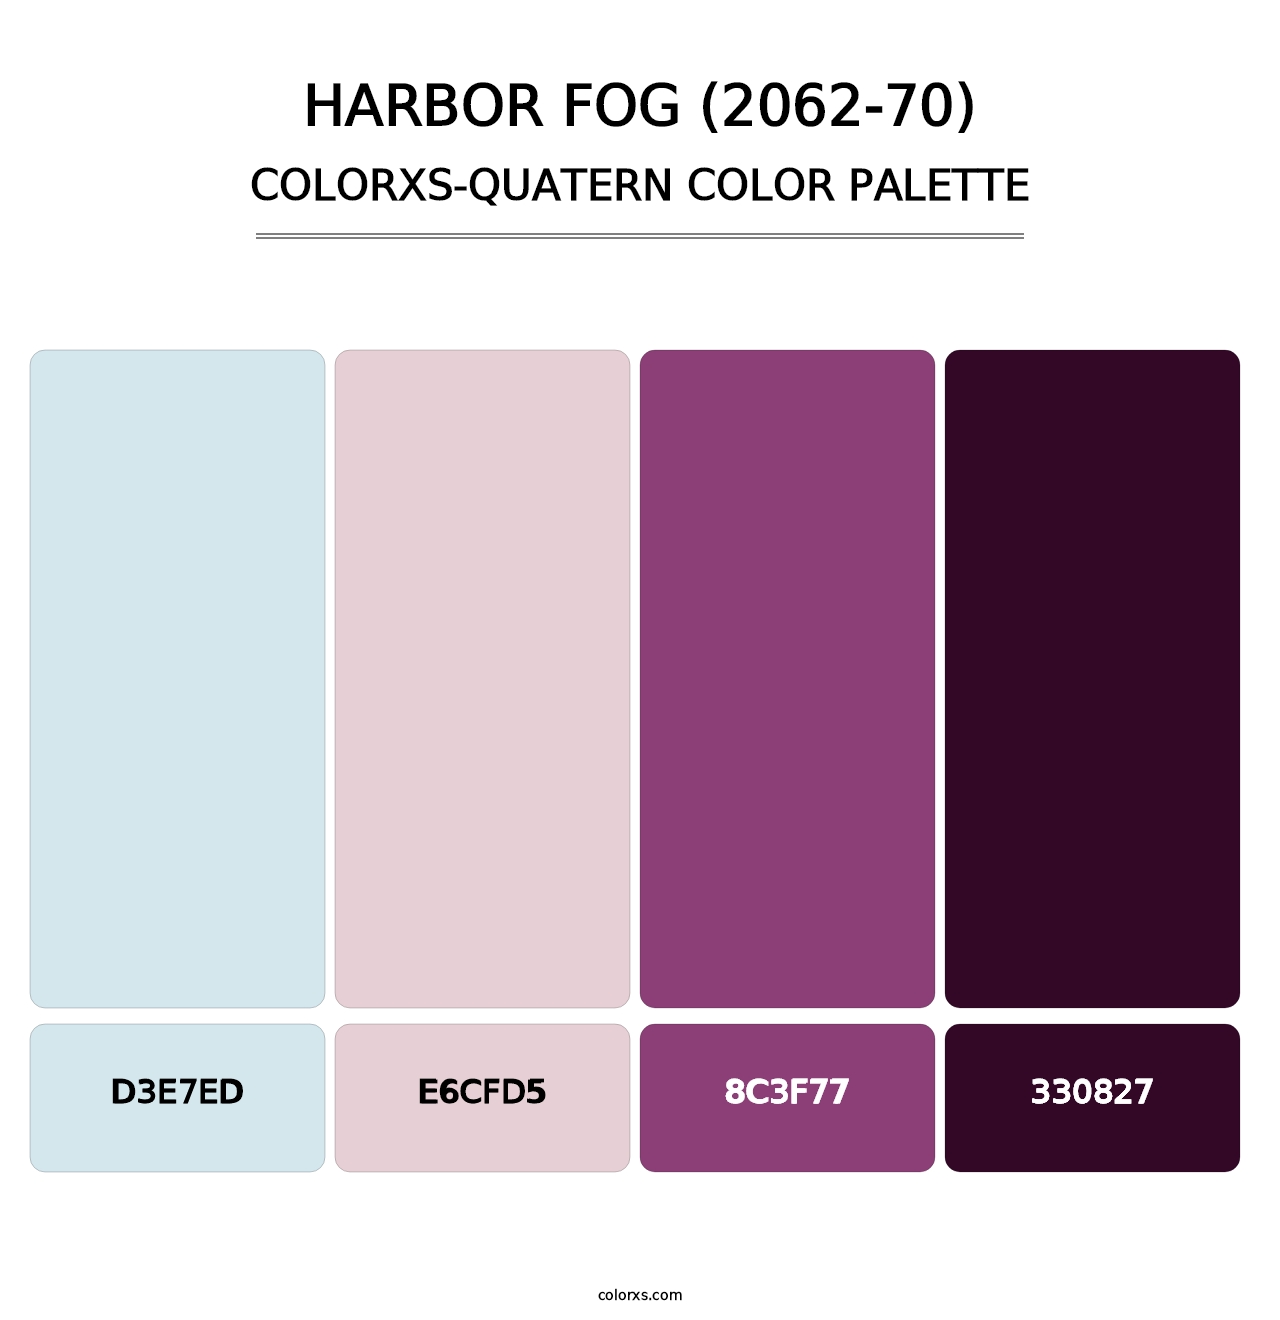 Harbor Fog (2062-70) - Colorxs Quatern Palette